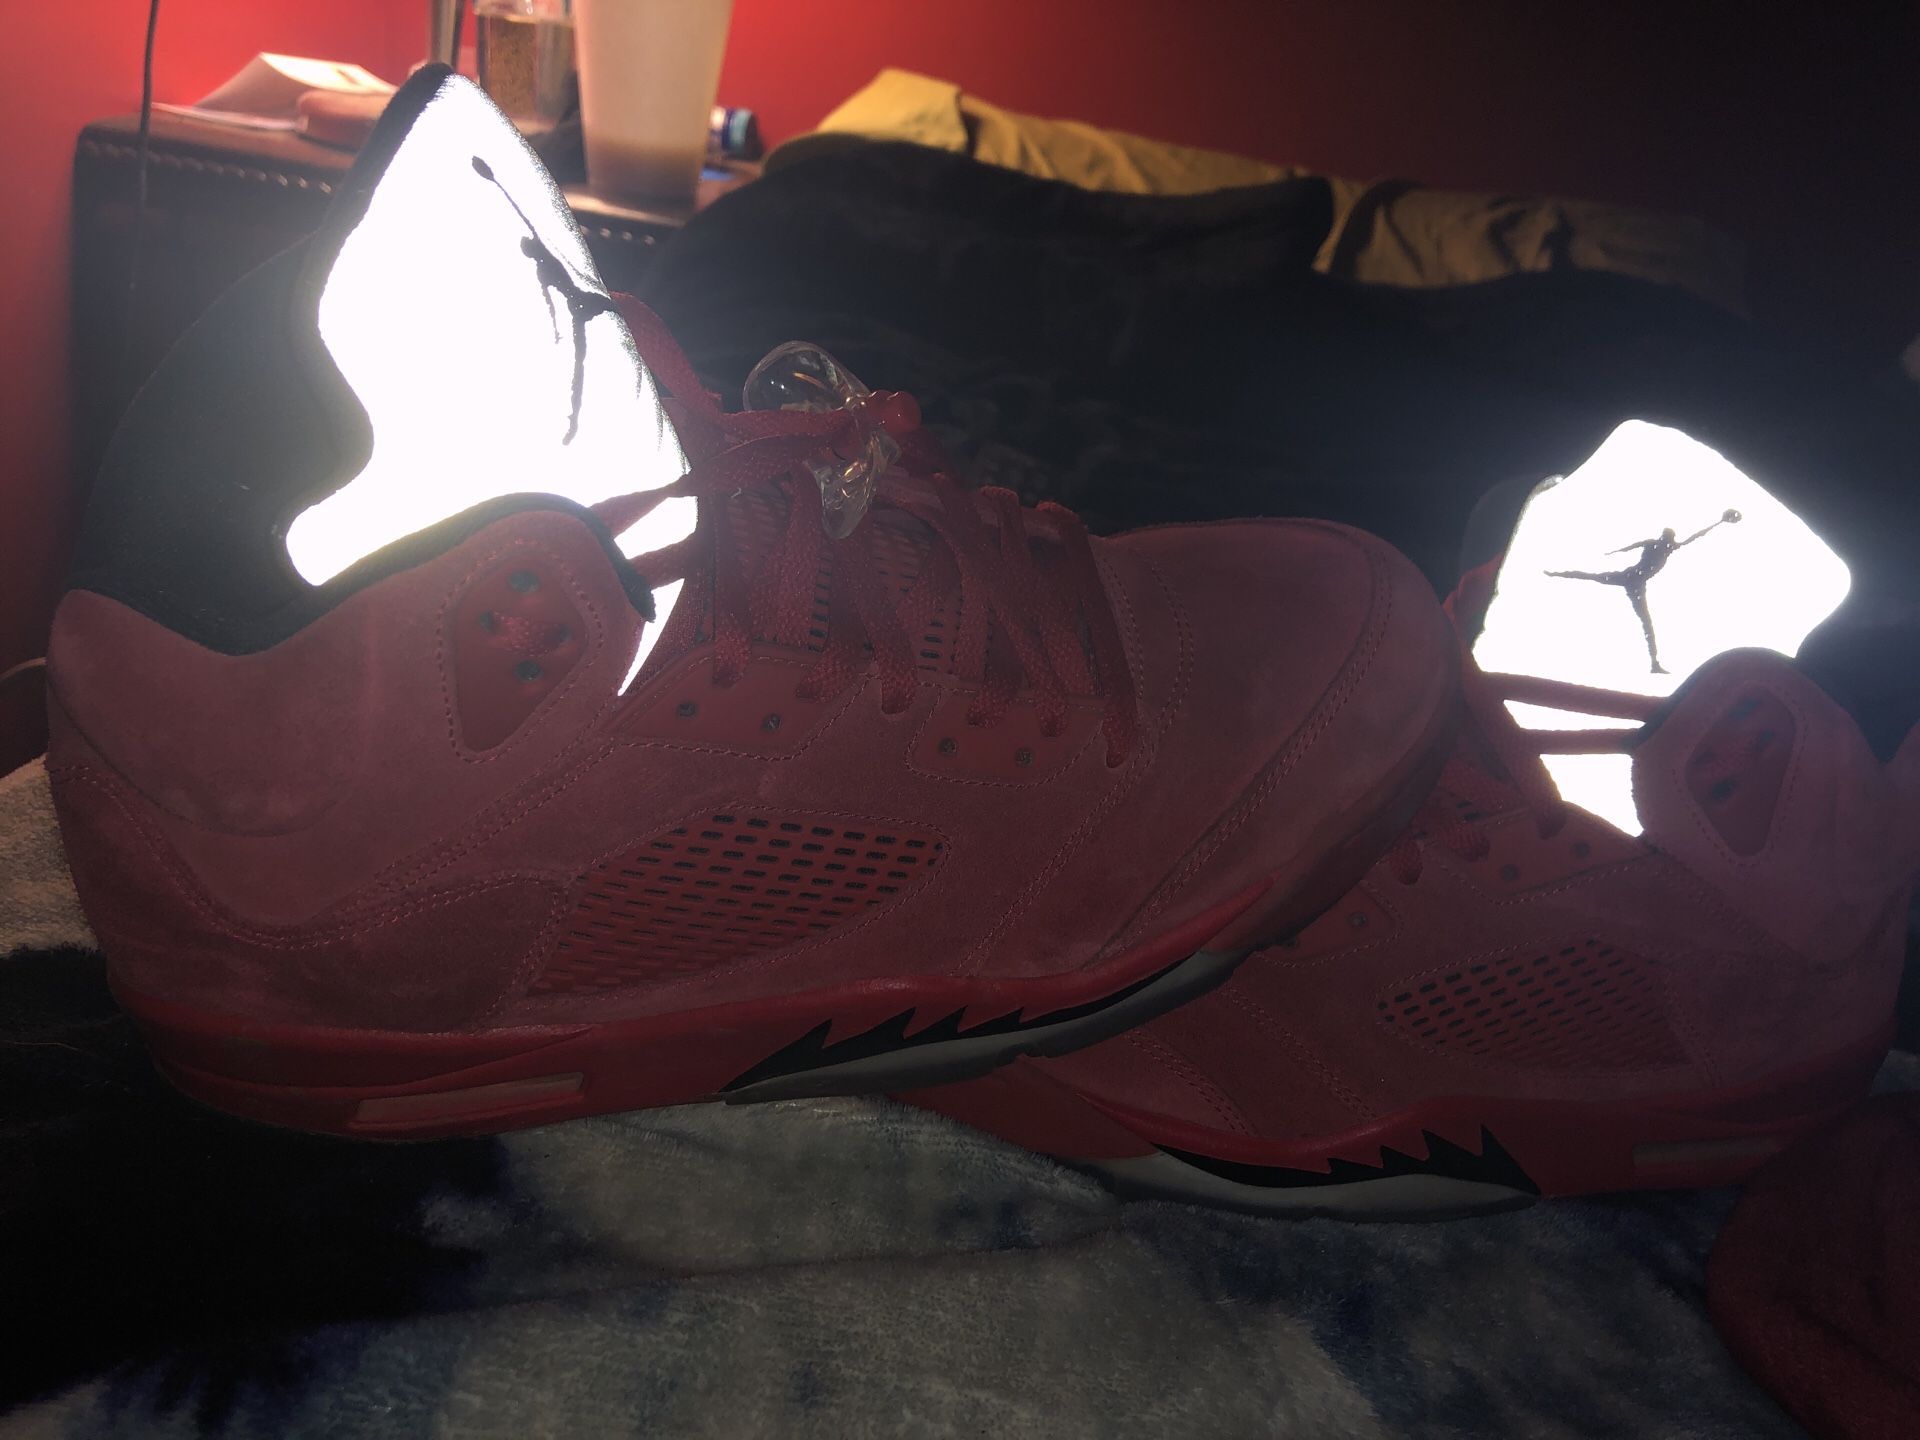 Jordan 5 red suede (size 12)